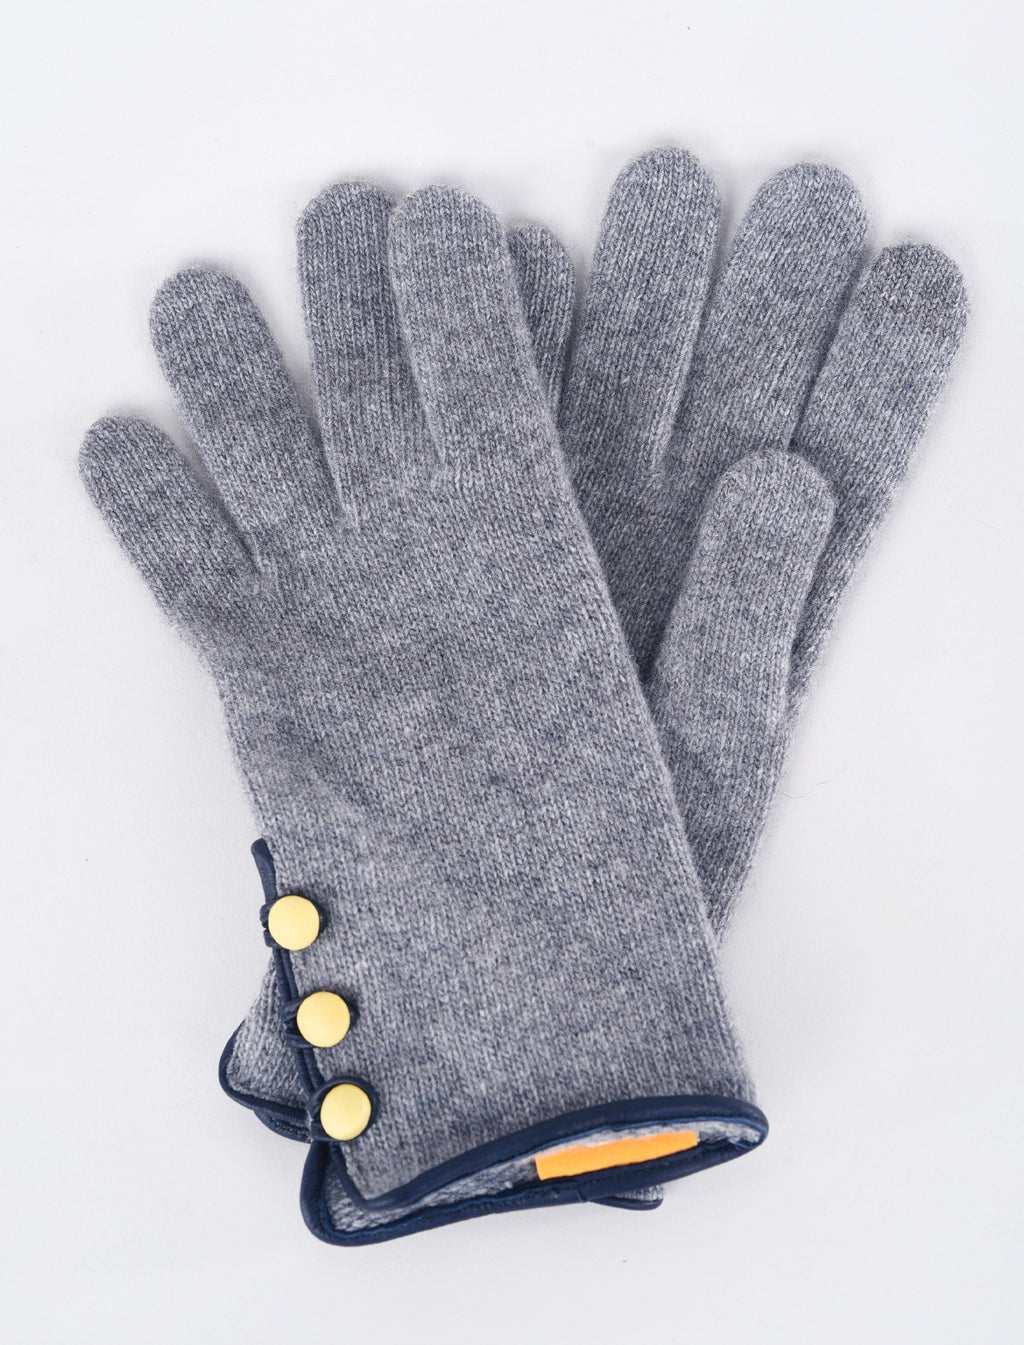 Santacana Madrid Tiny Button Cashmere/Wool Glove, Gray 